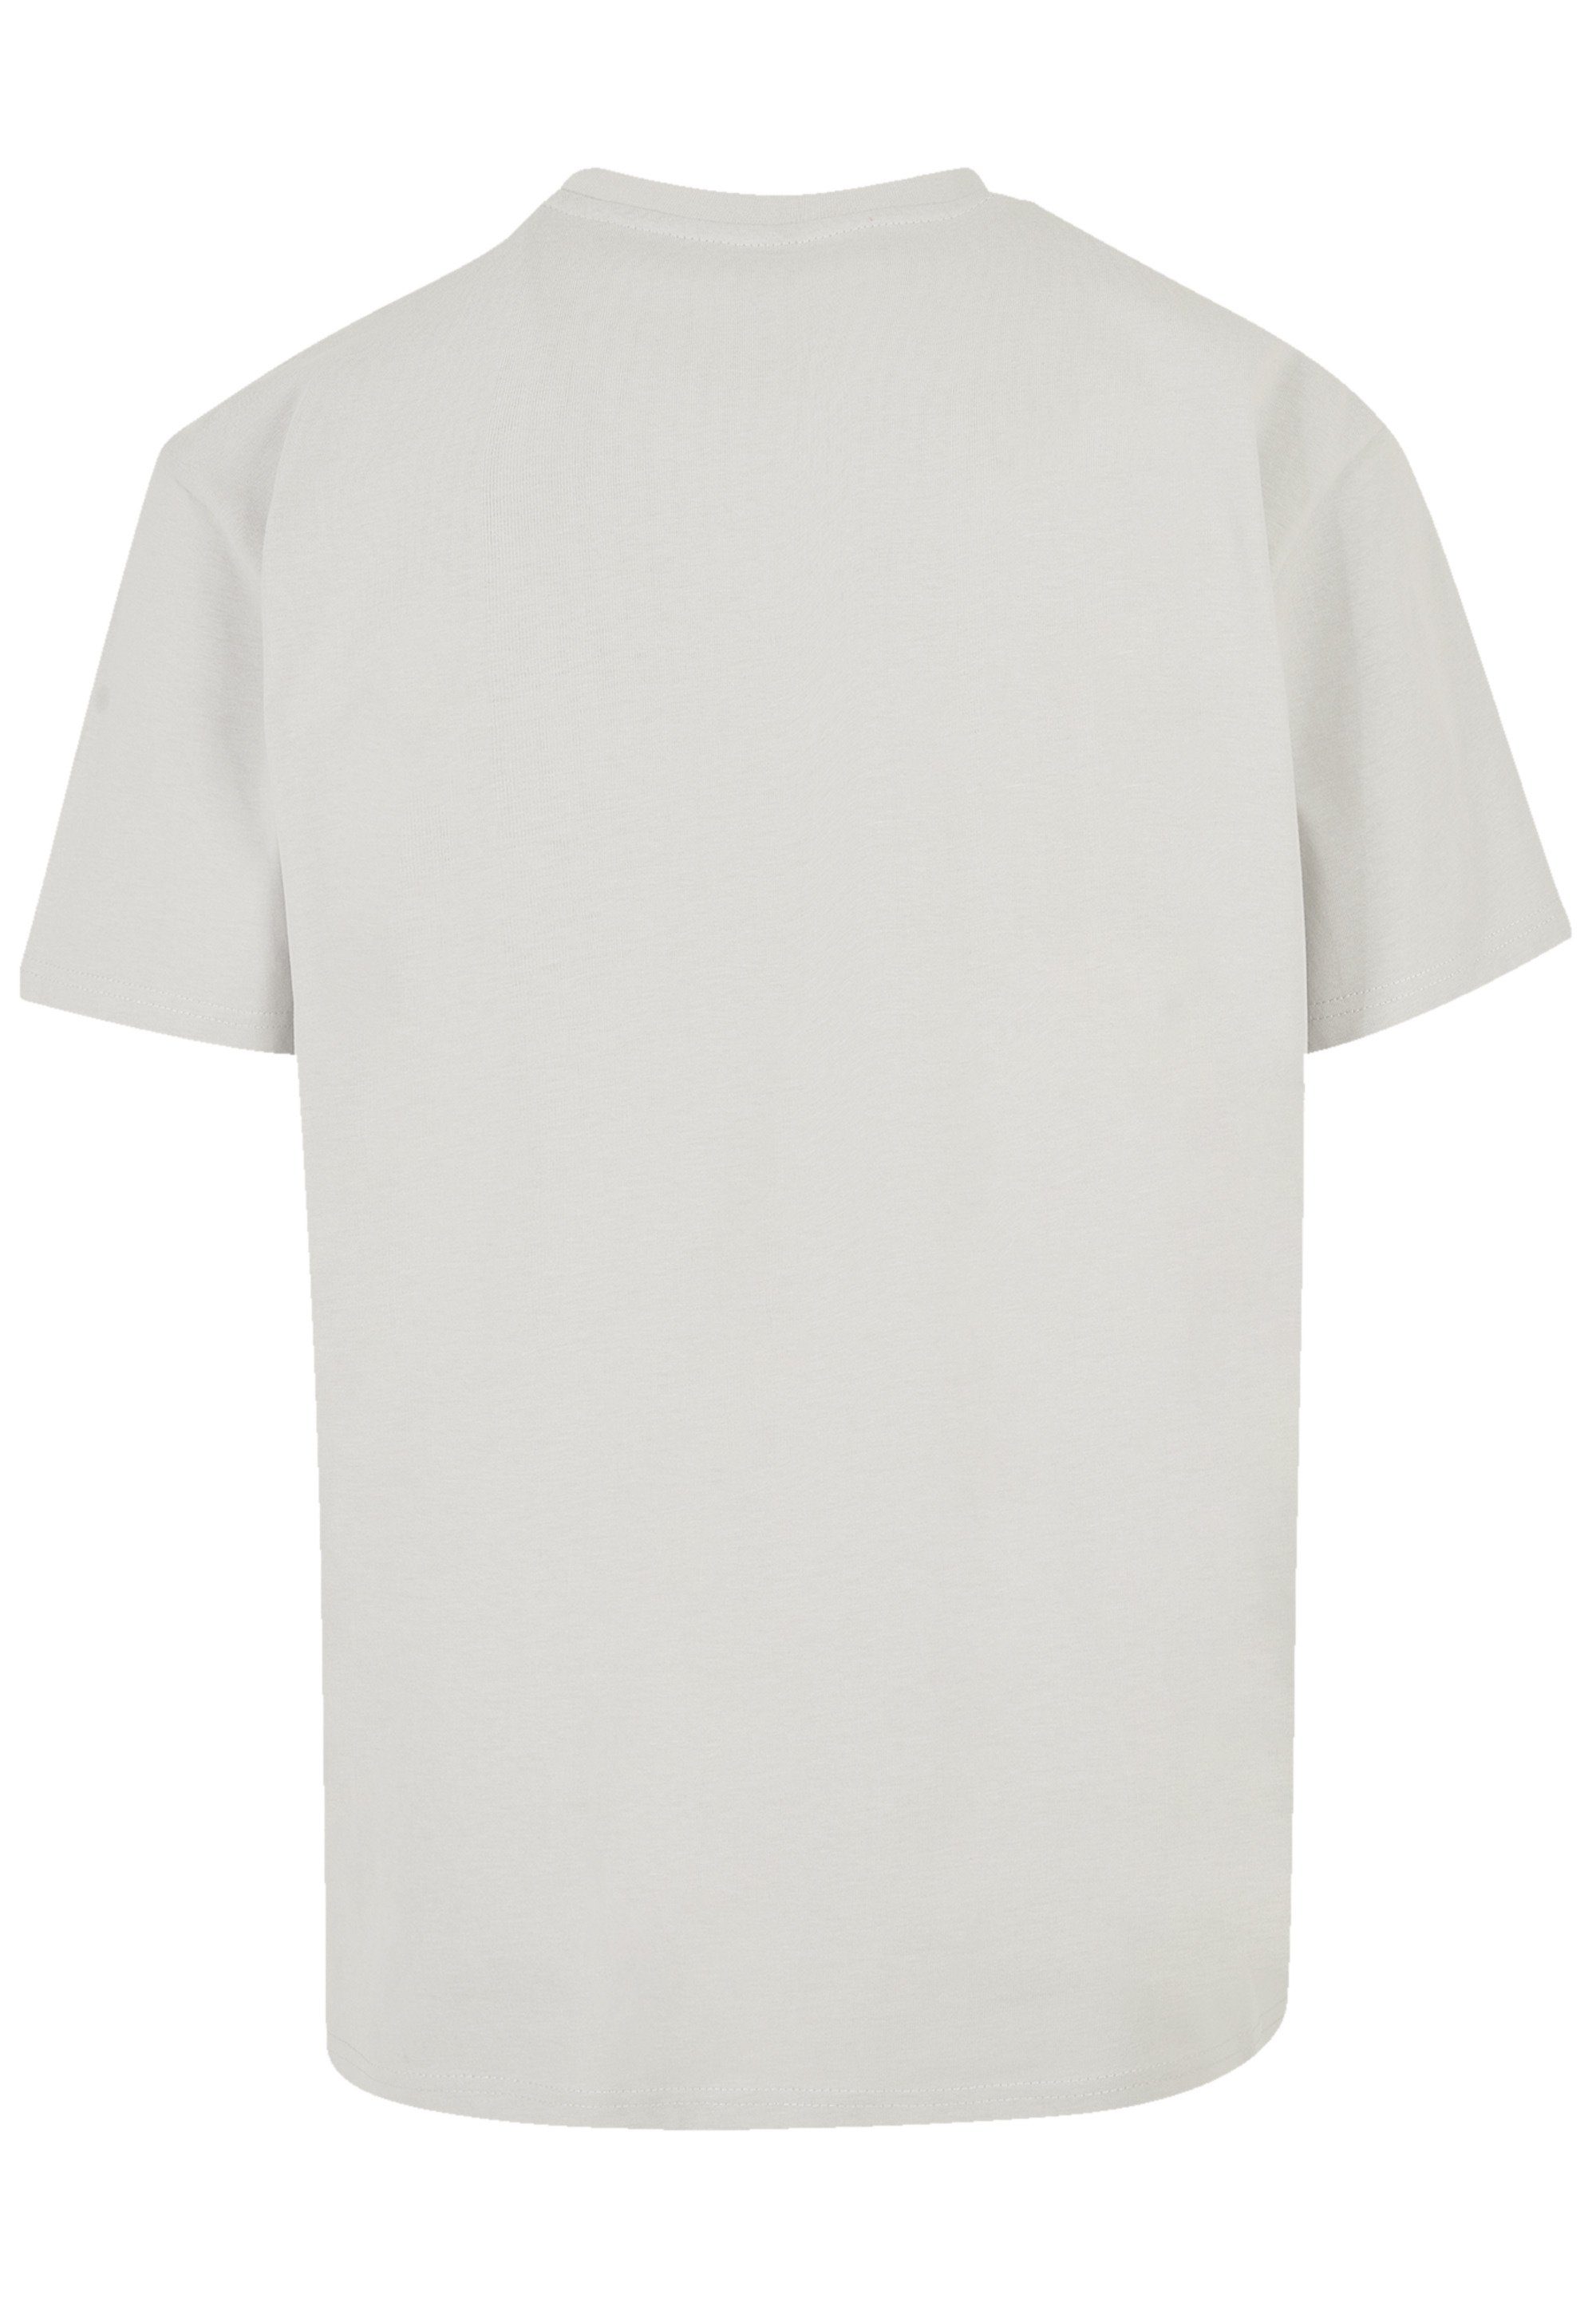 Japan T-Shirt Print Welle lightasphalt Kanagawa F4NT4STIC